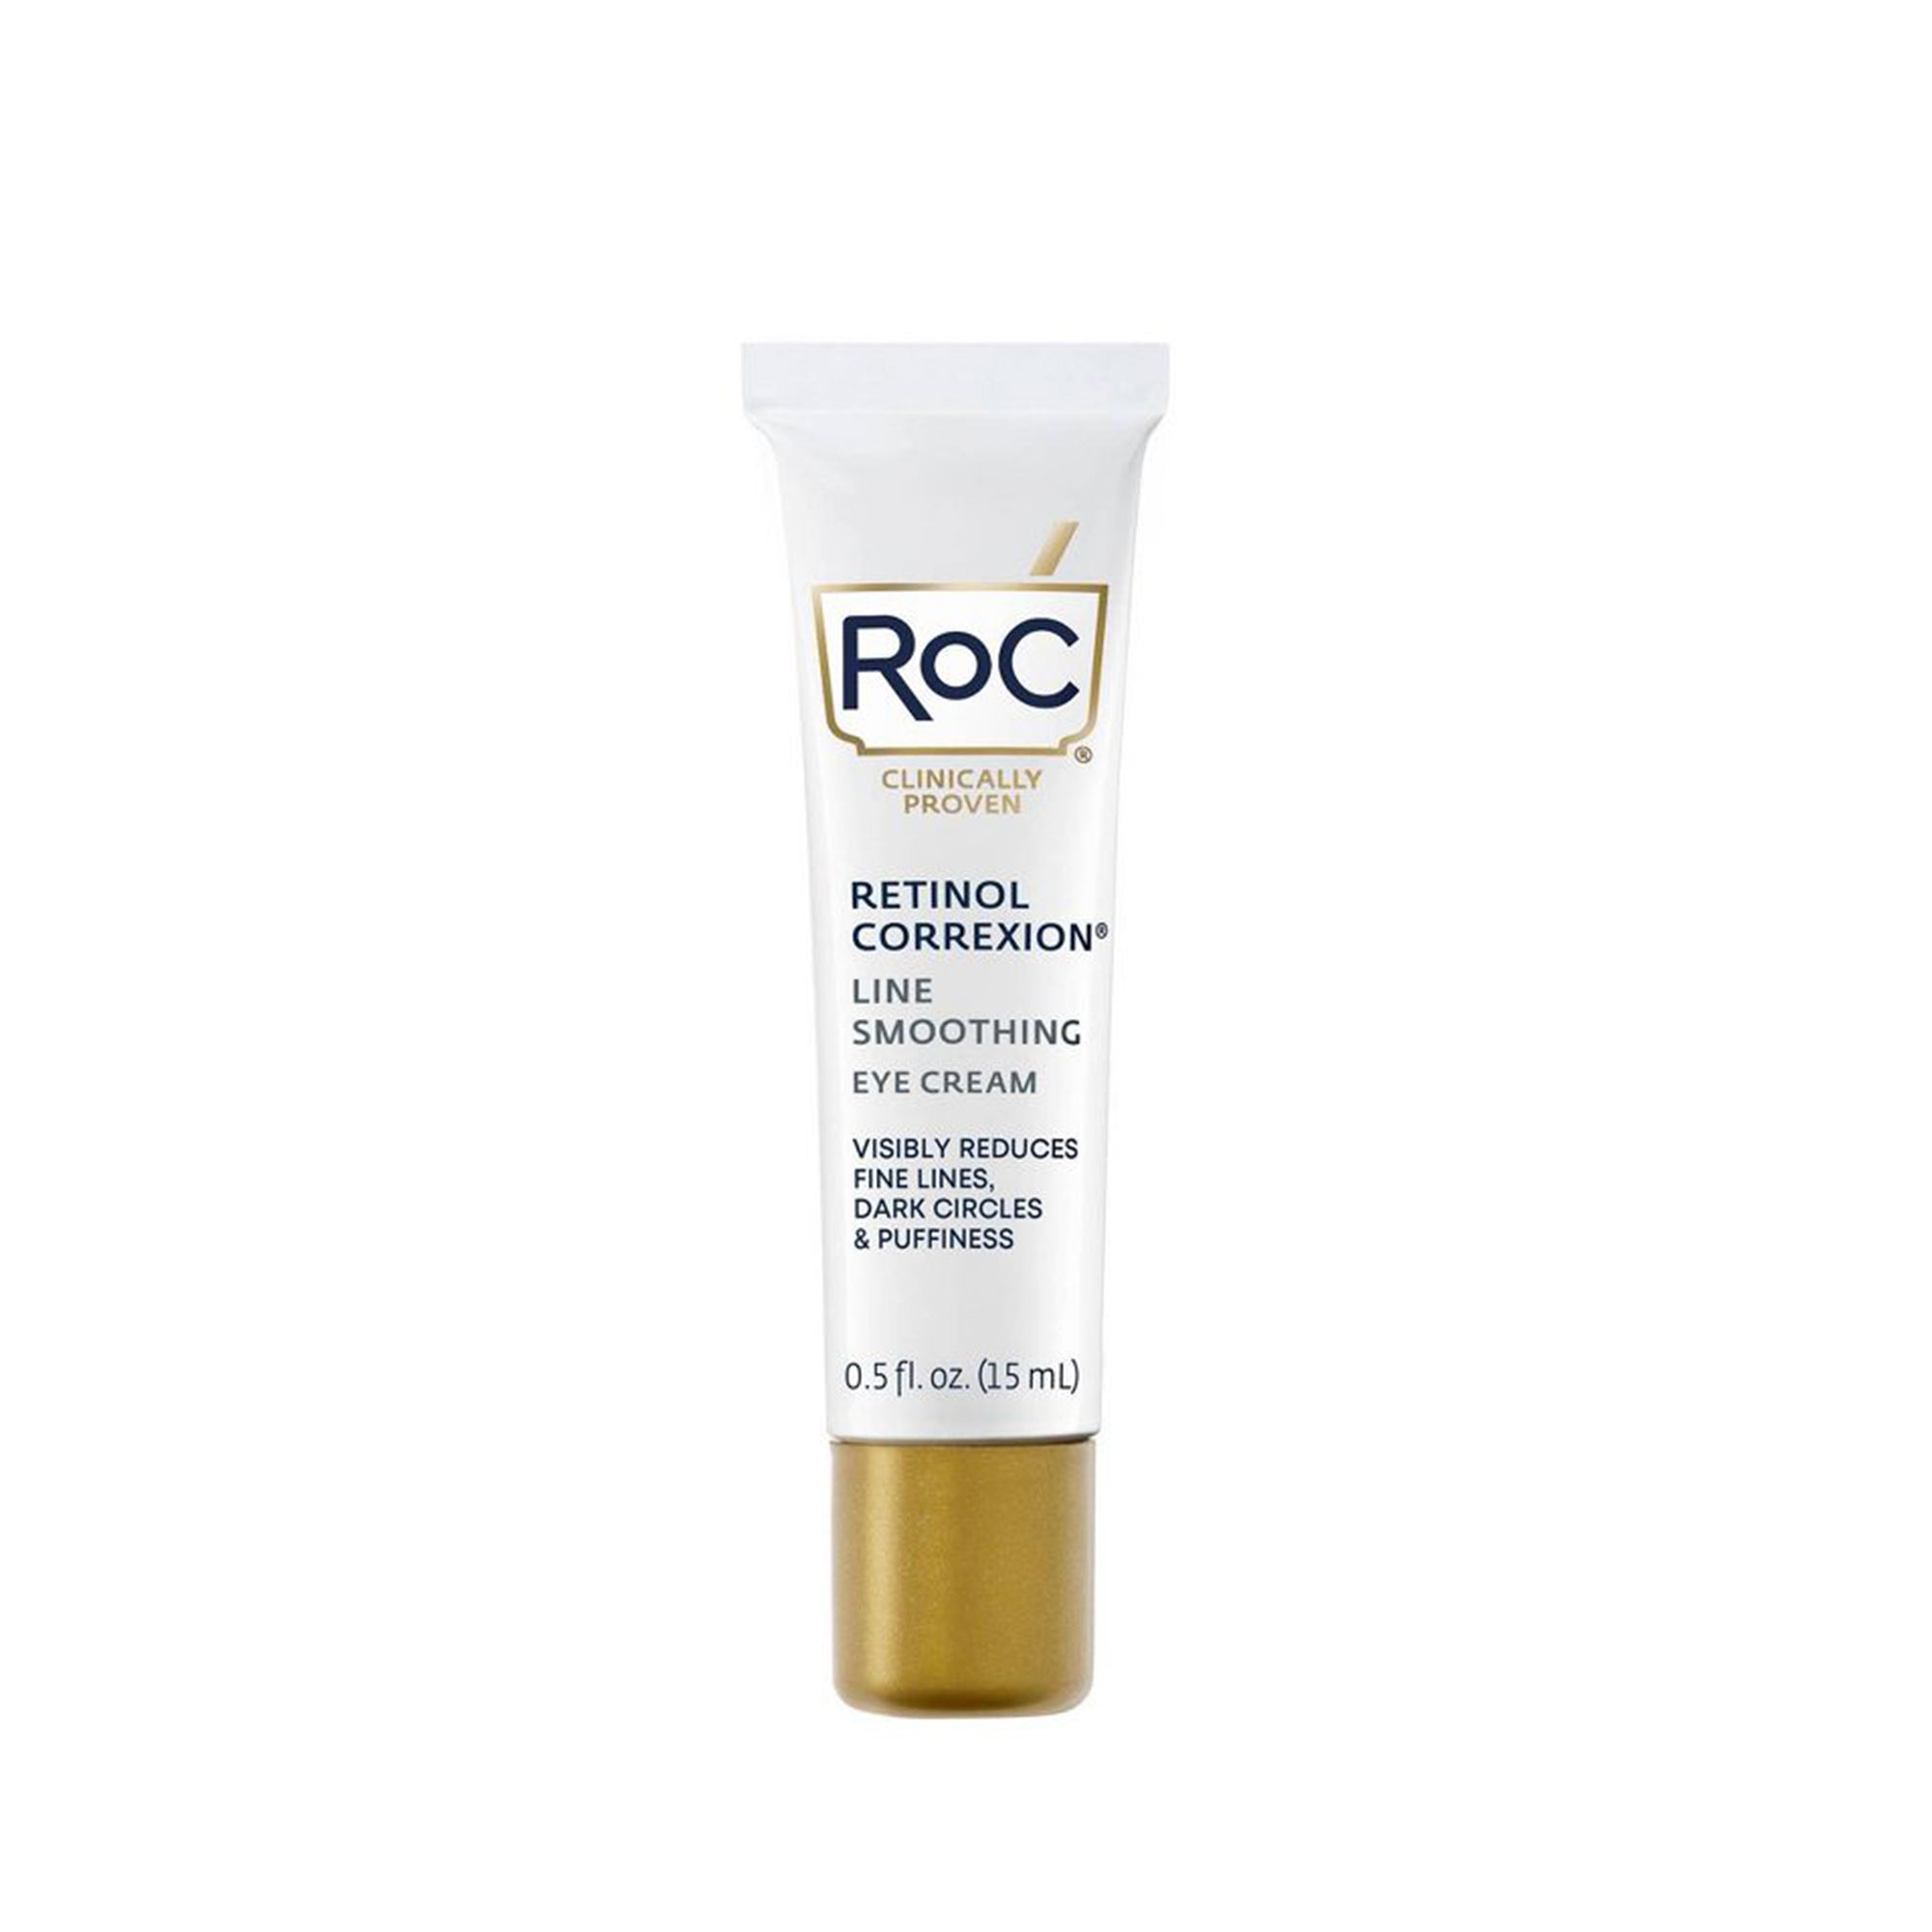 RoC Retinol Correxion Line Smoothing Anti-Aging Wrinkle Eye Cream for Dark Circles and Puffy Eyes, 0.5 fl oz